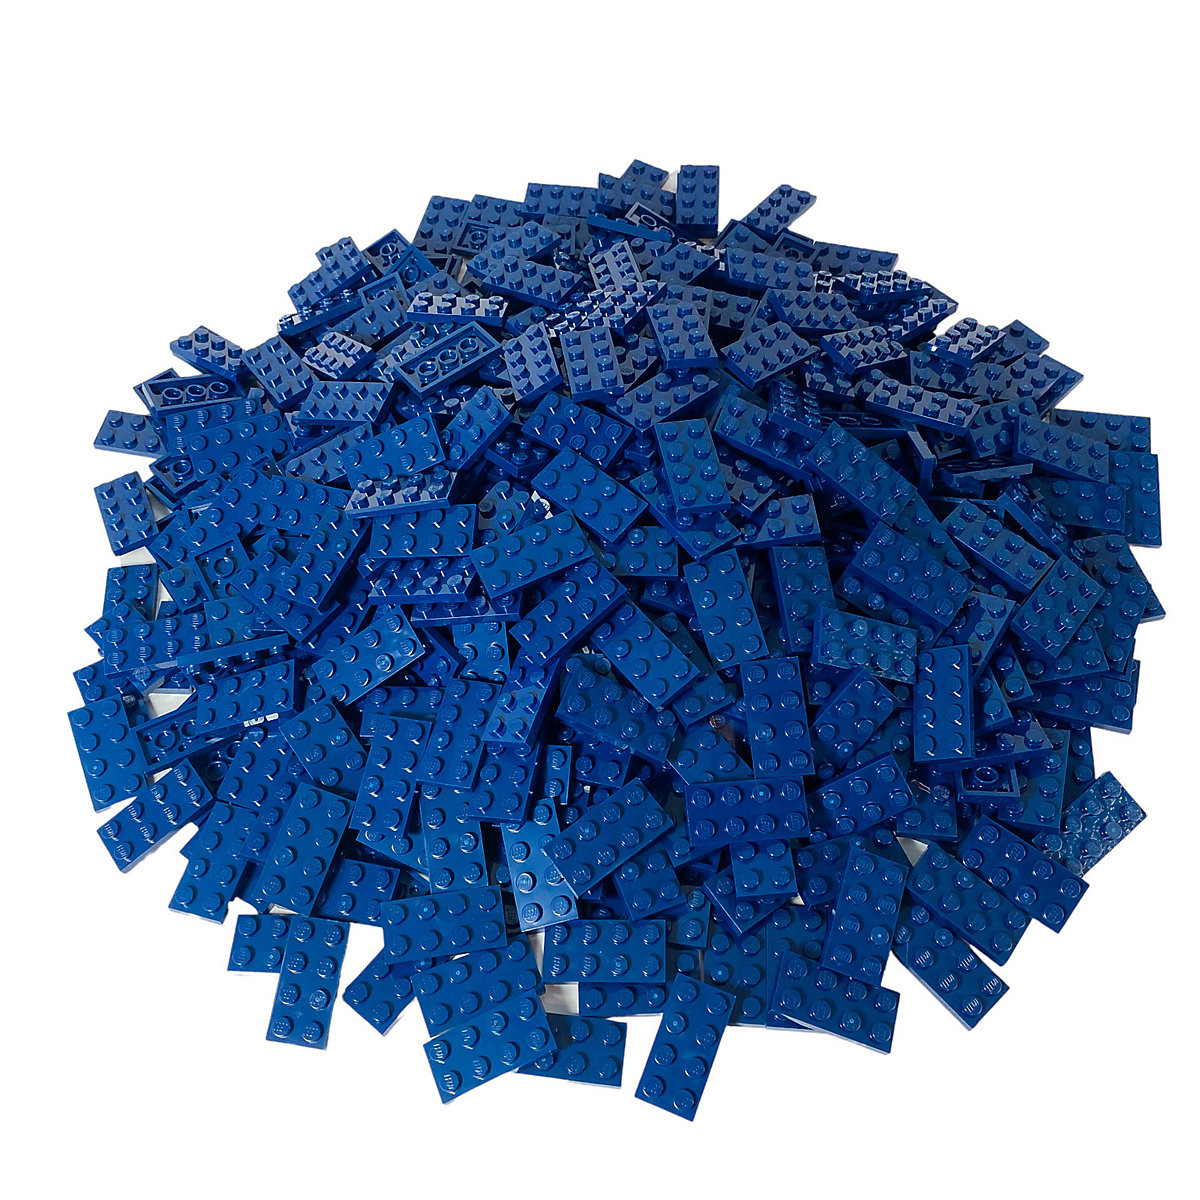 LEGO® 2x4 Platten Dunkelblau Classic Basic City Dark Blue Plates 3020 NEU! Menge 1000x